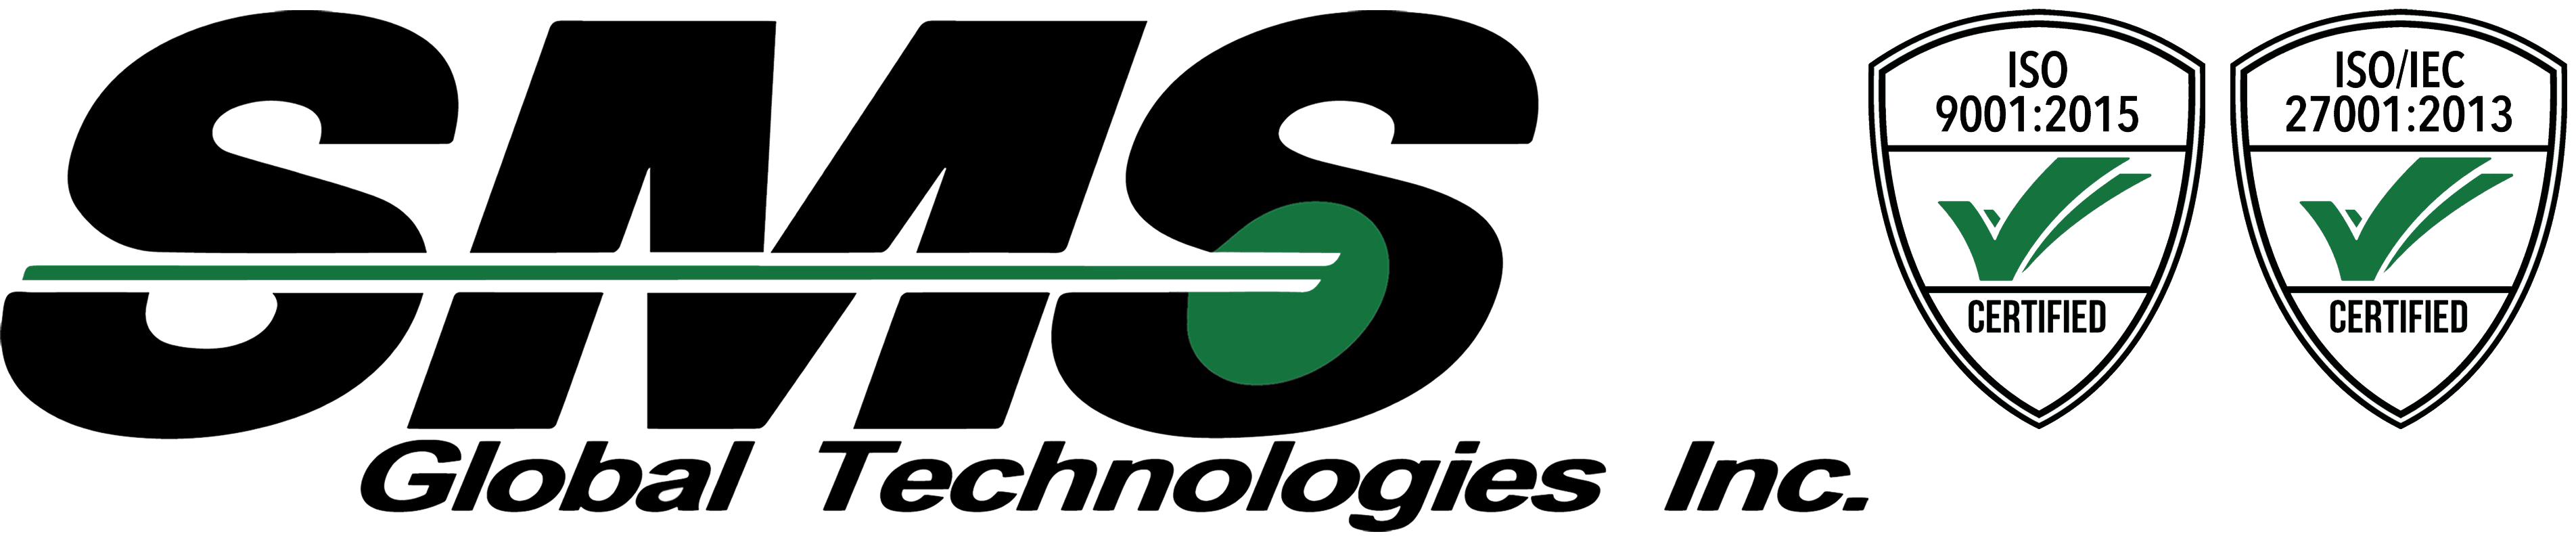 SMSgt Logo - SMS Global Technologies Inc